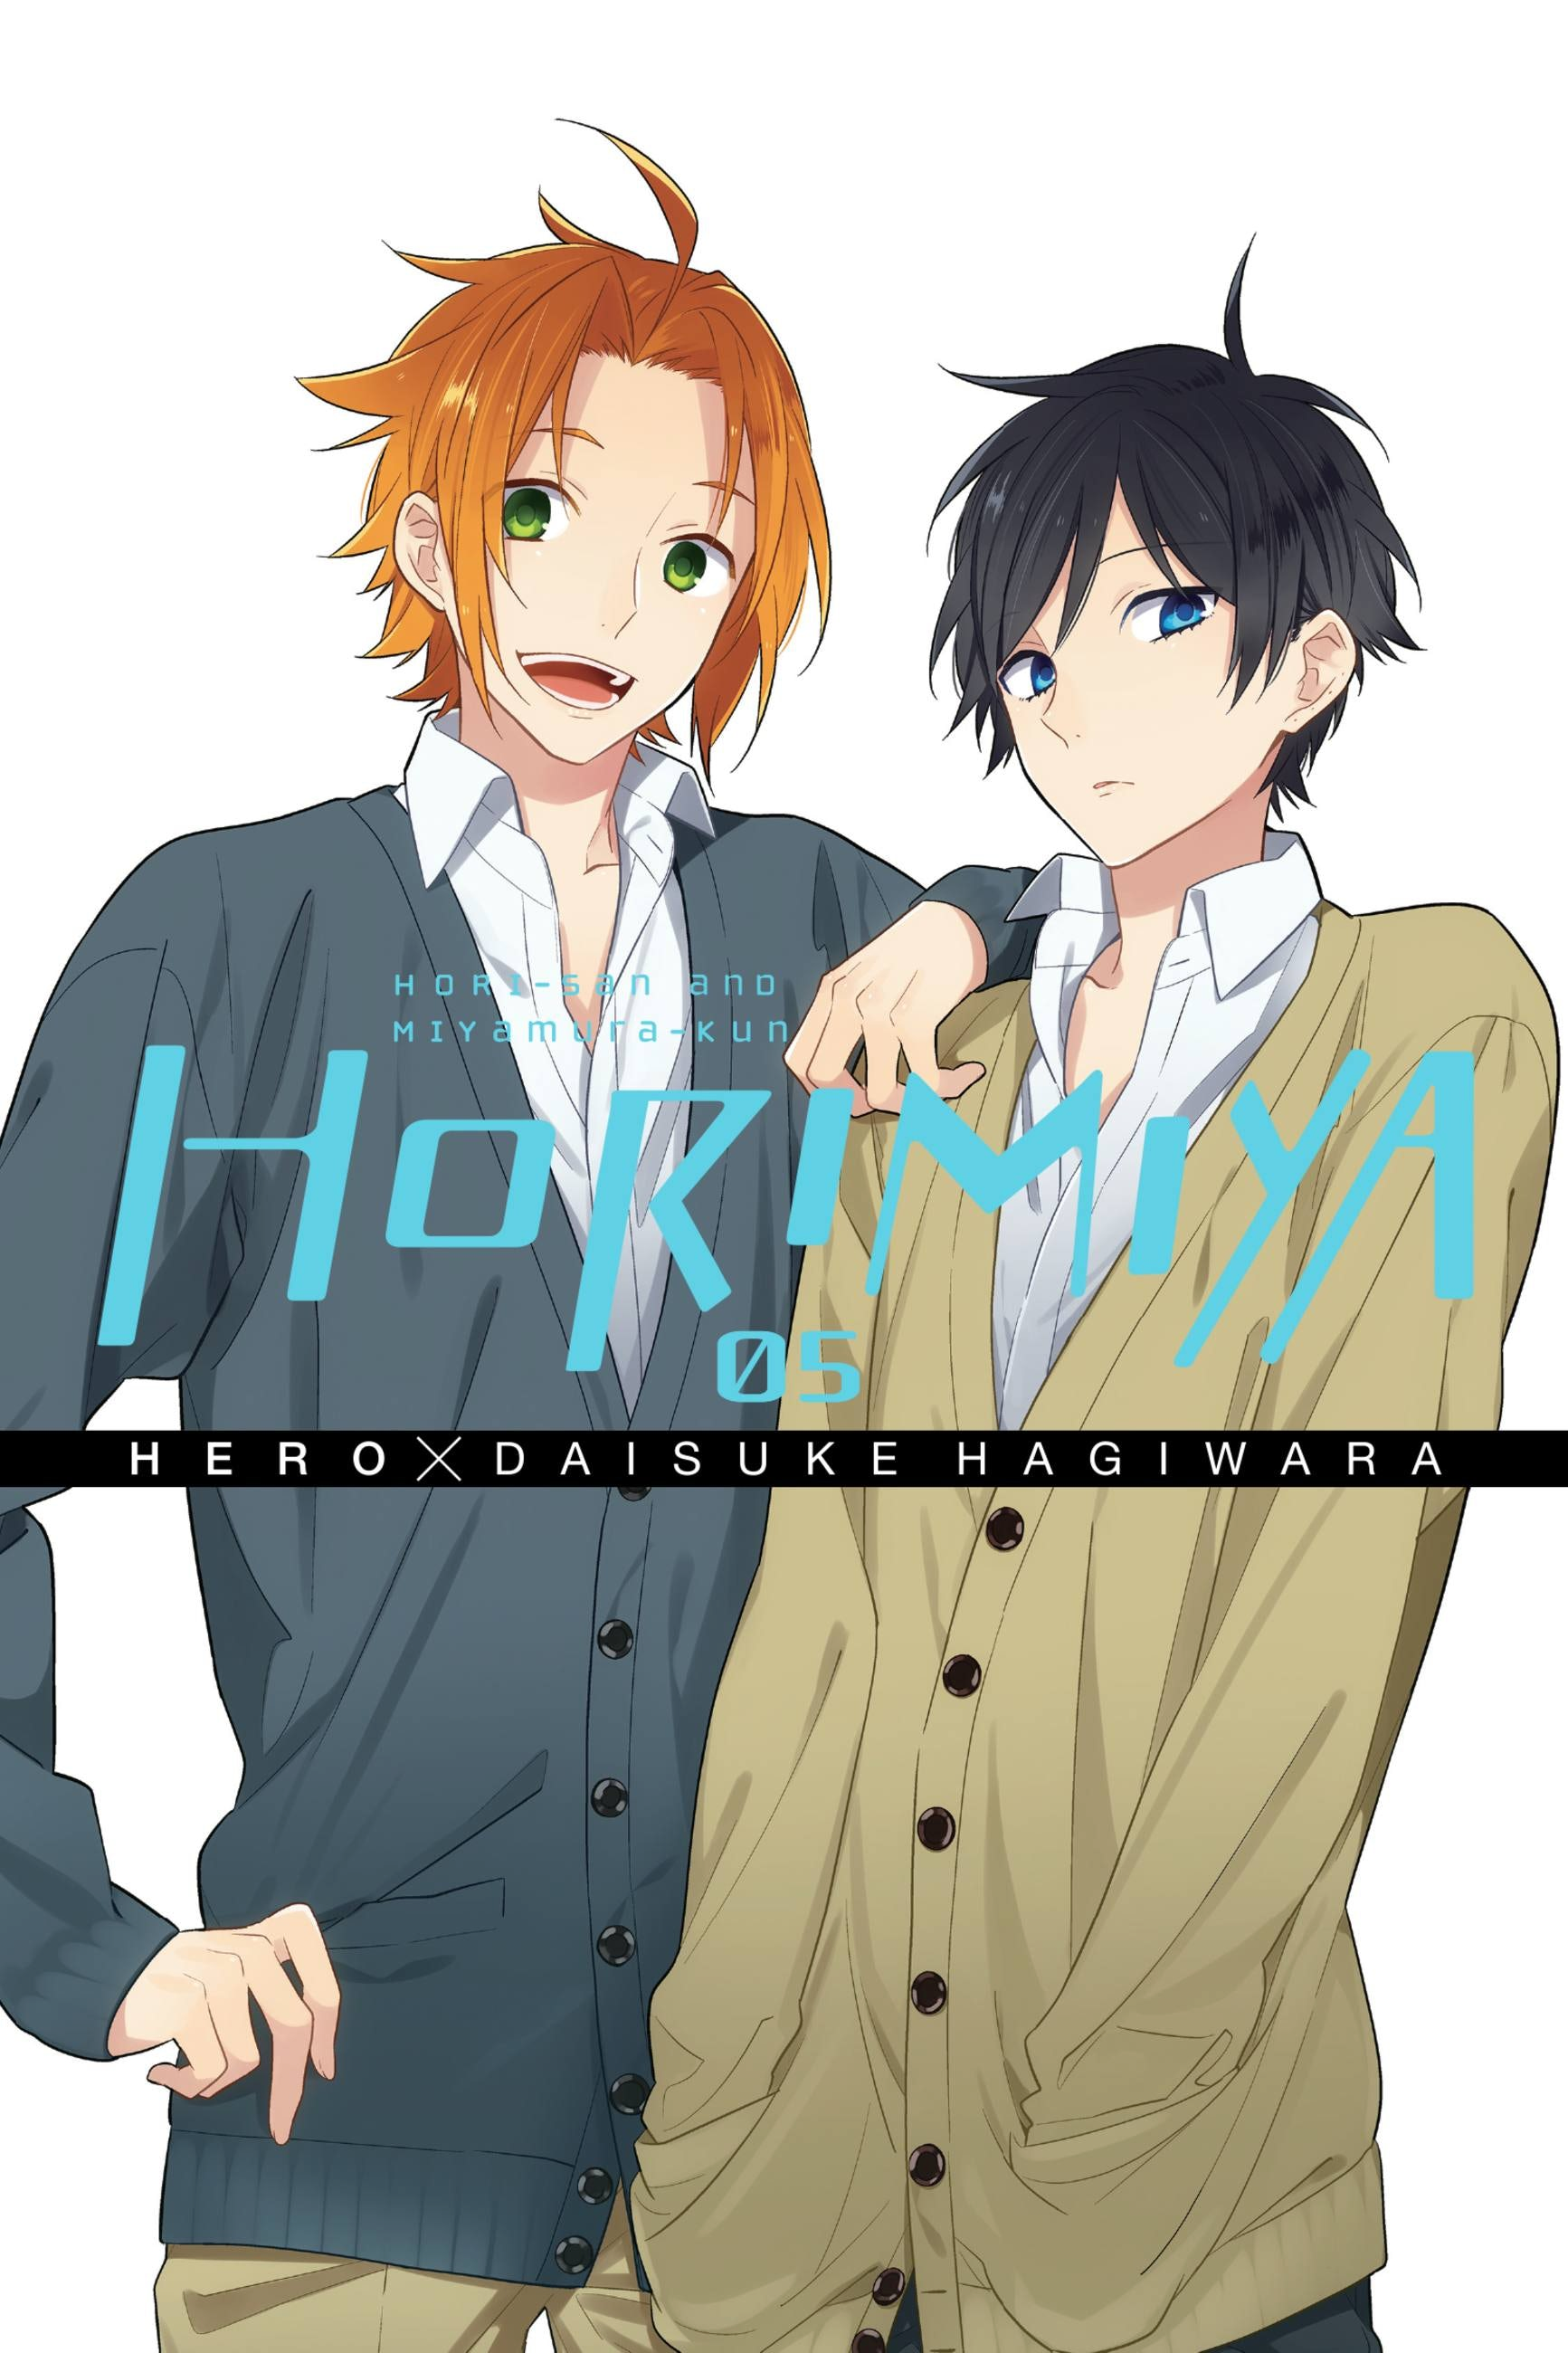 The Most Charming Anime This Season? It's 'Horimiya'! | J-List Blog